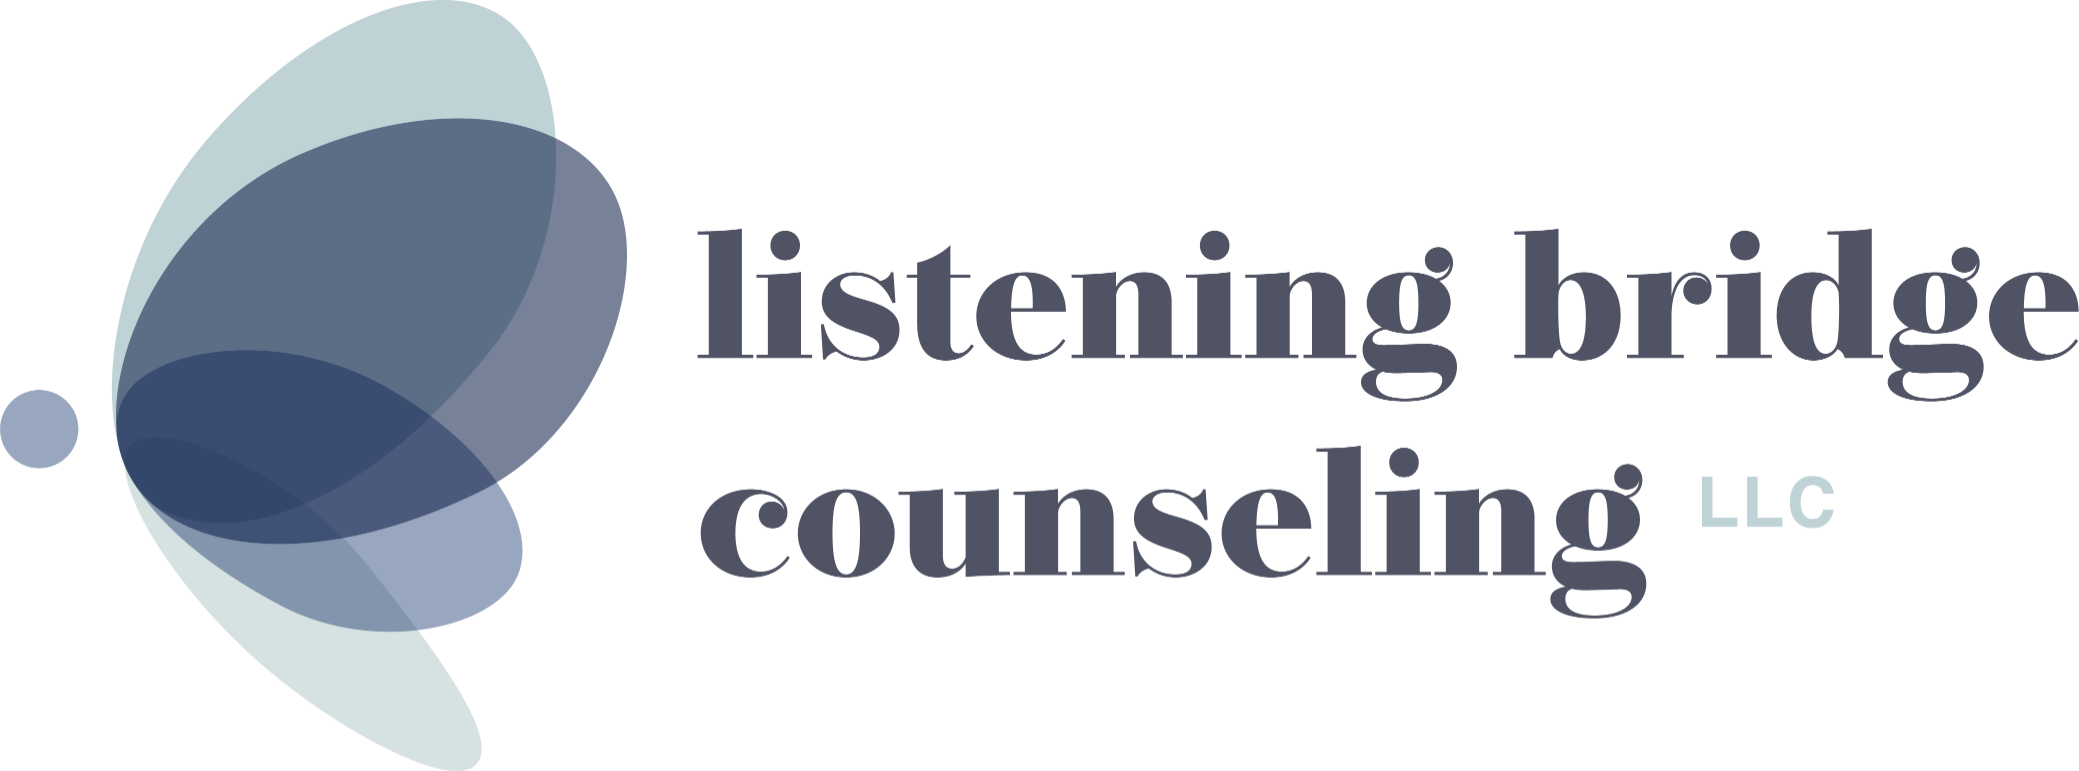 Listening Bridge Counseling, LLC